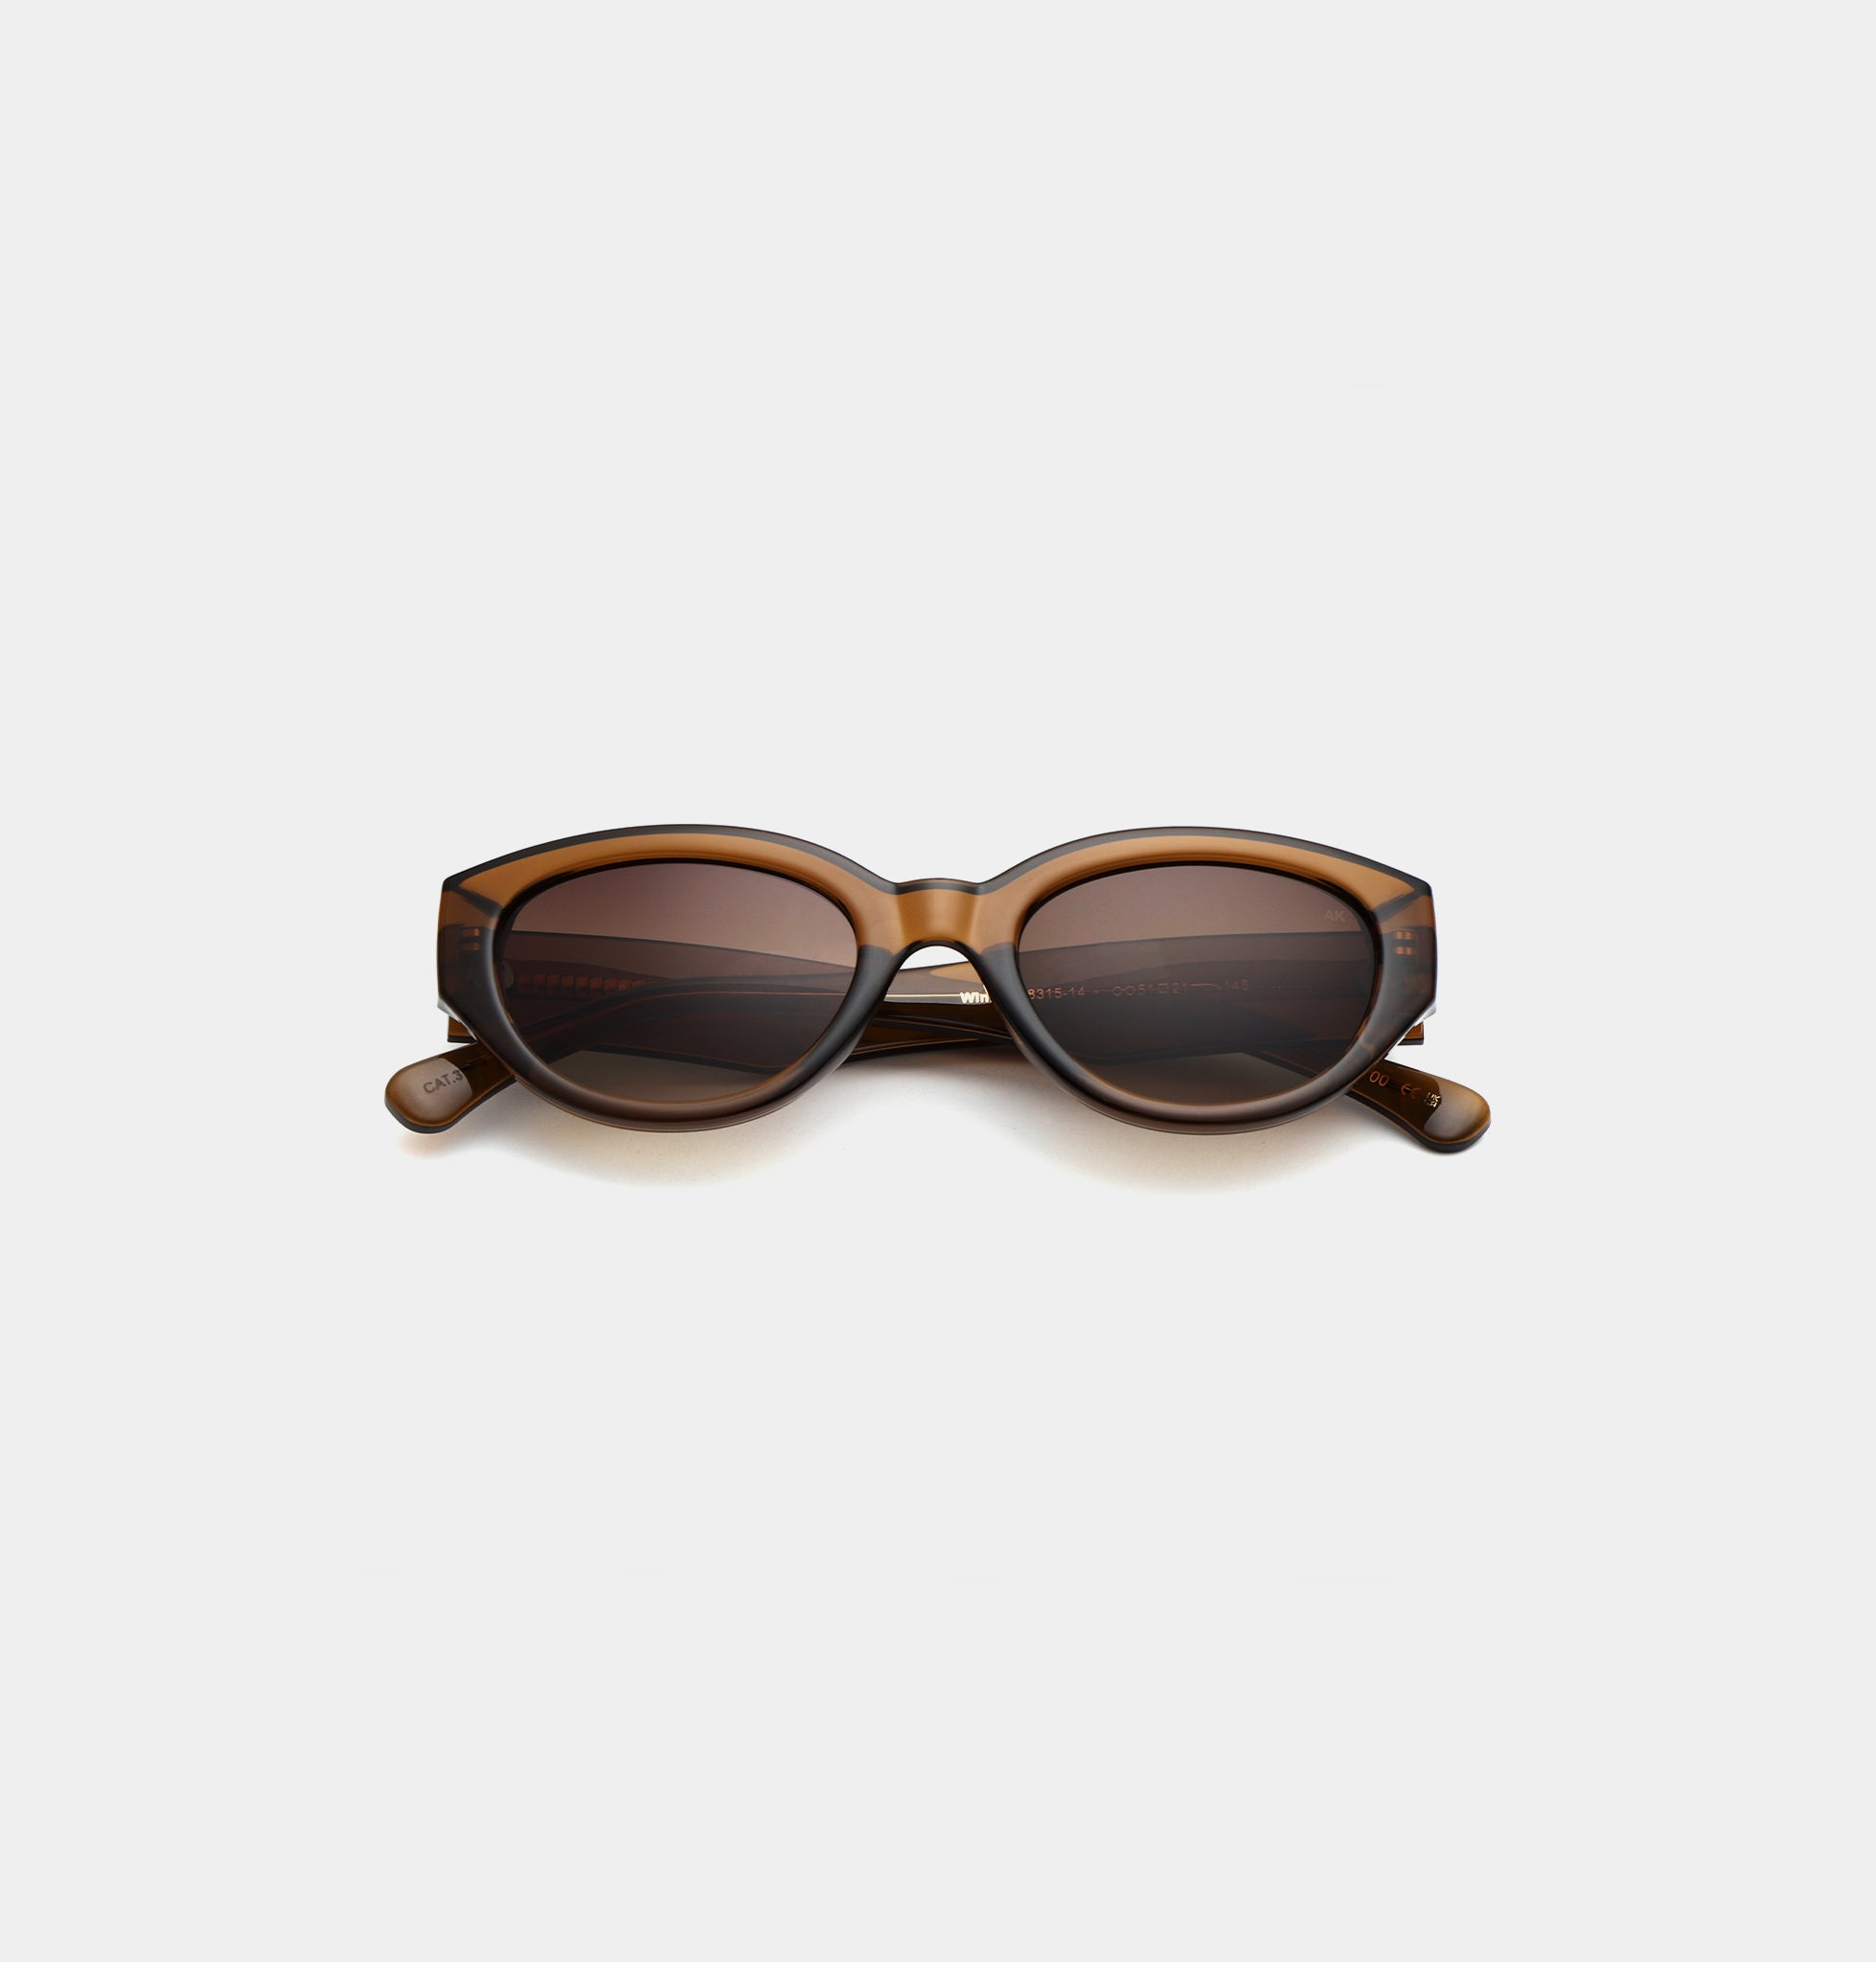 Winnie sunglasses in smoke transparent